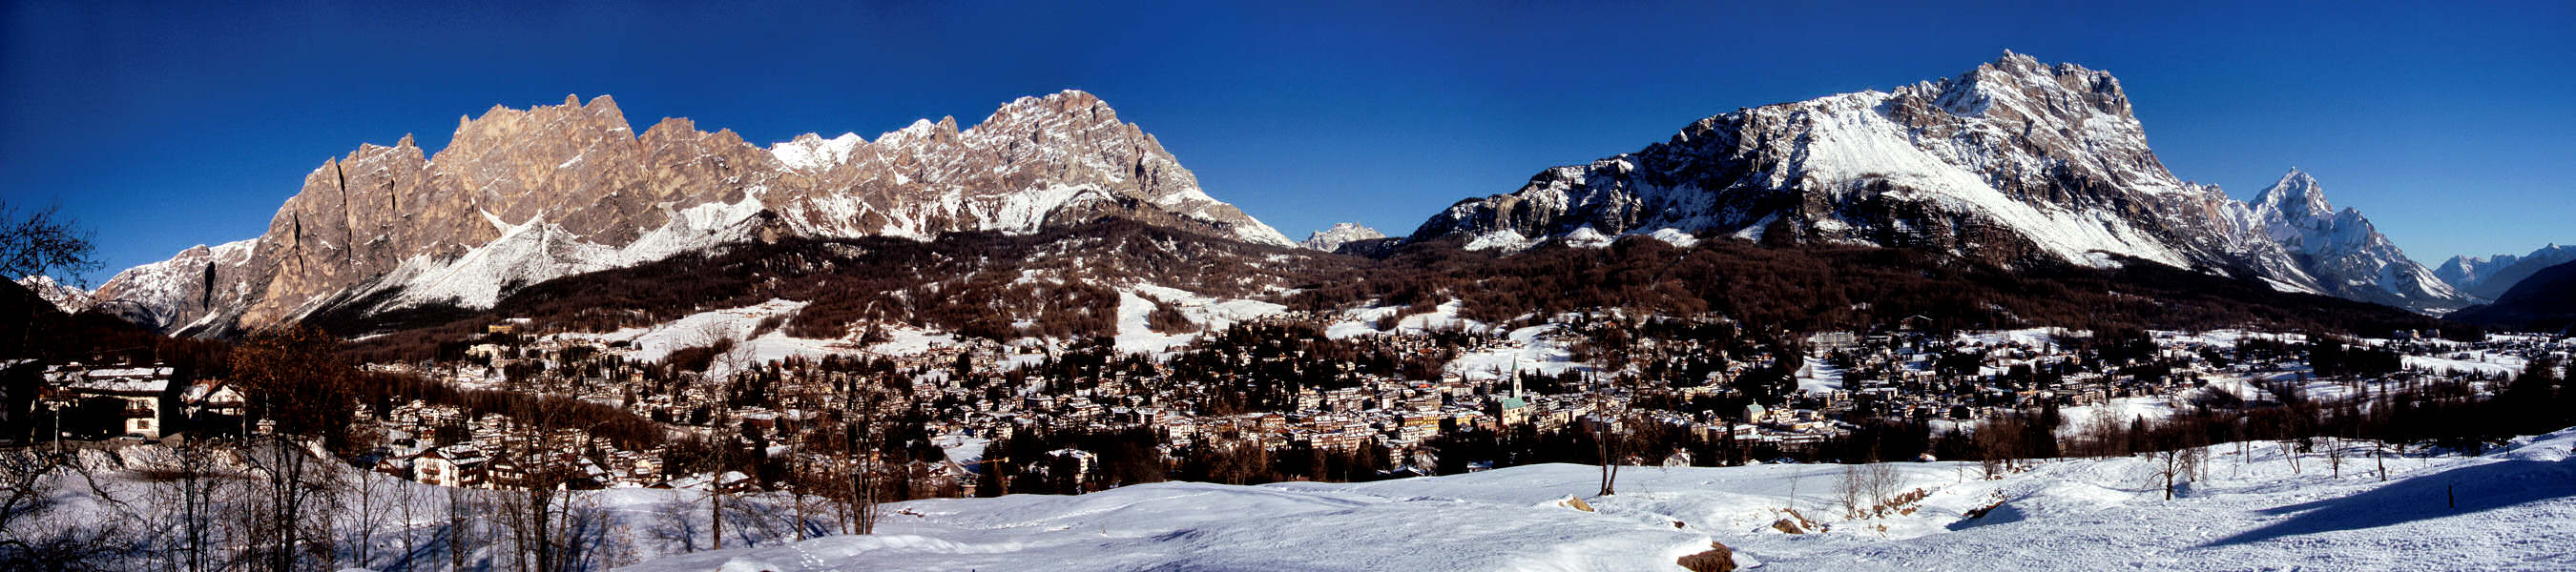 Dolomiti, Cortina d'Ampezzo